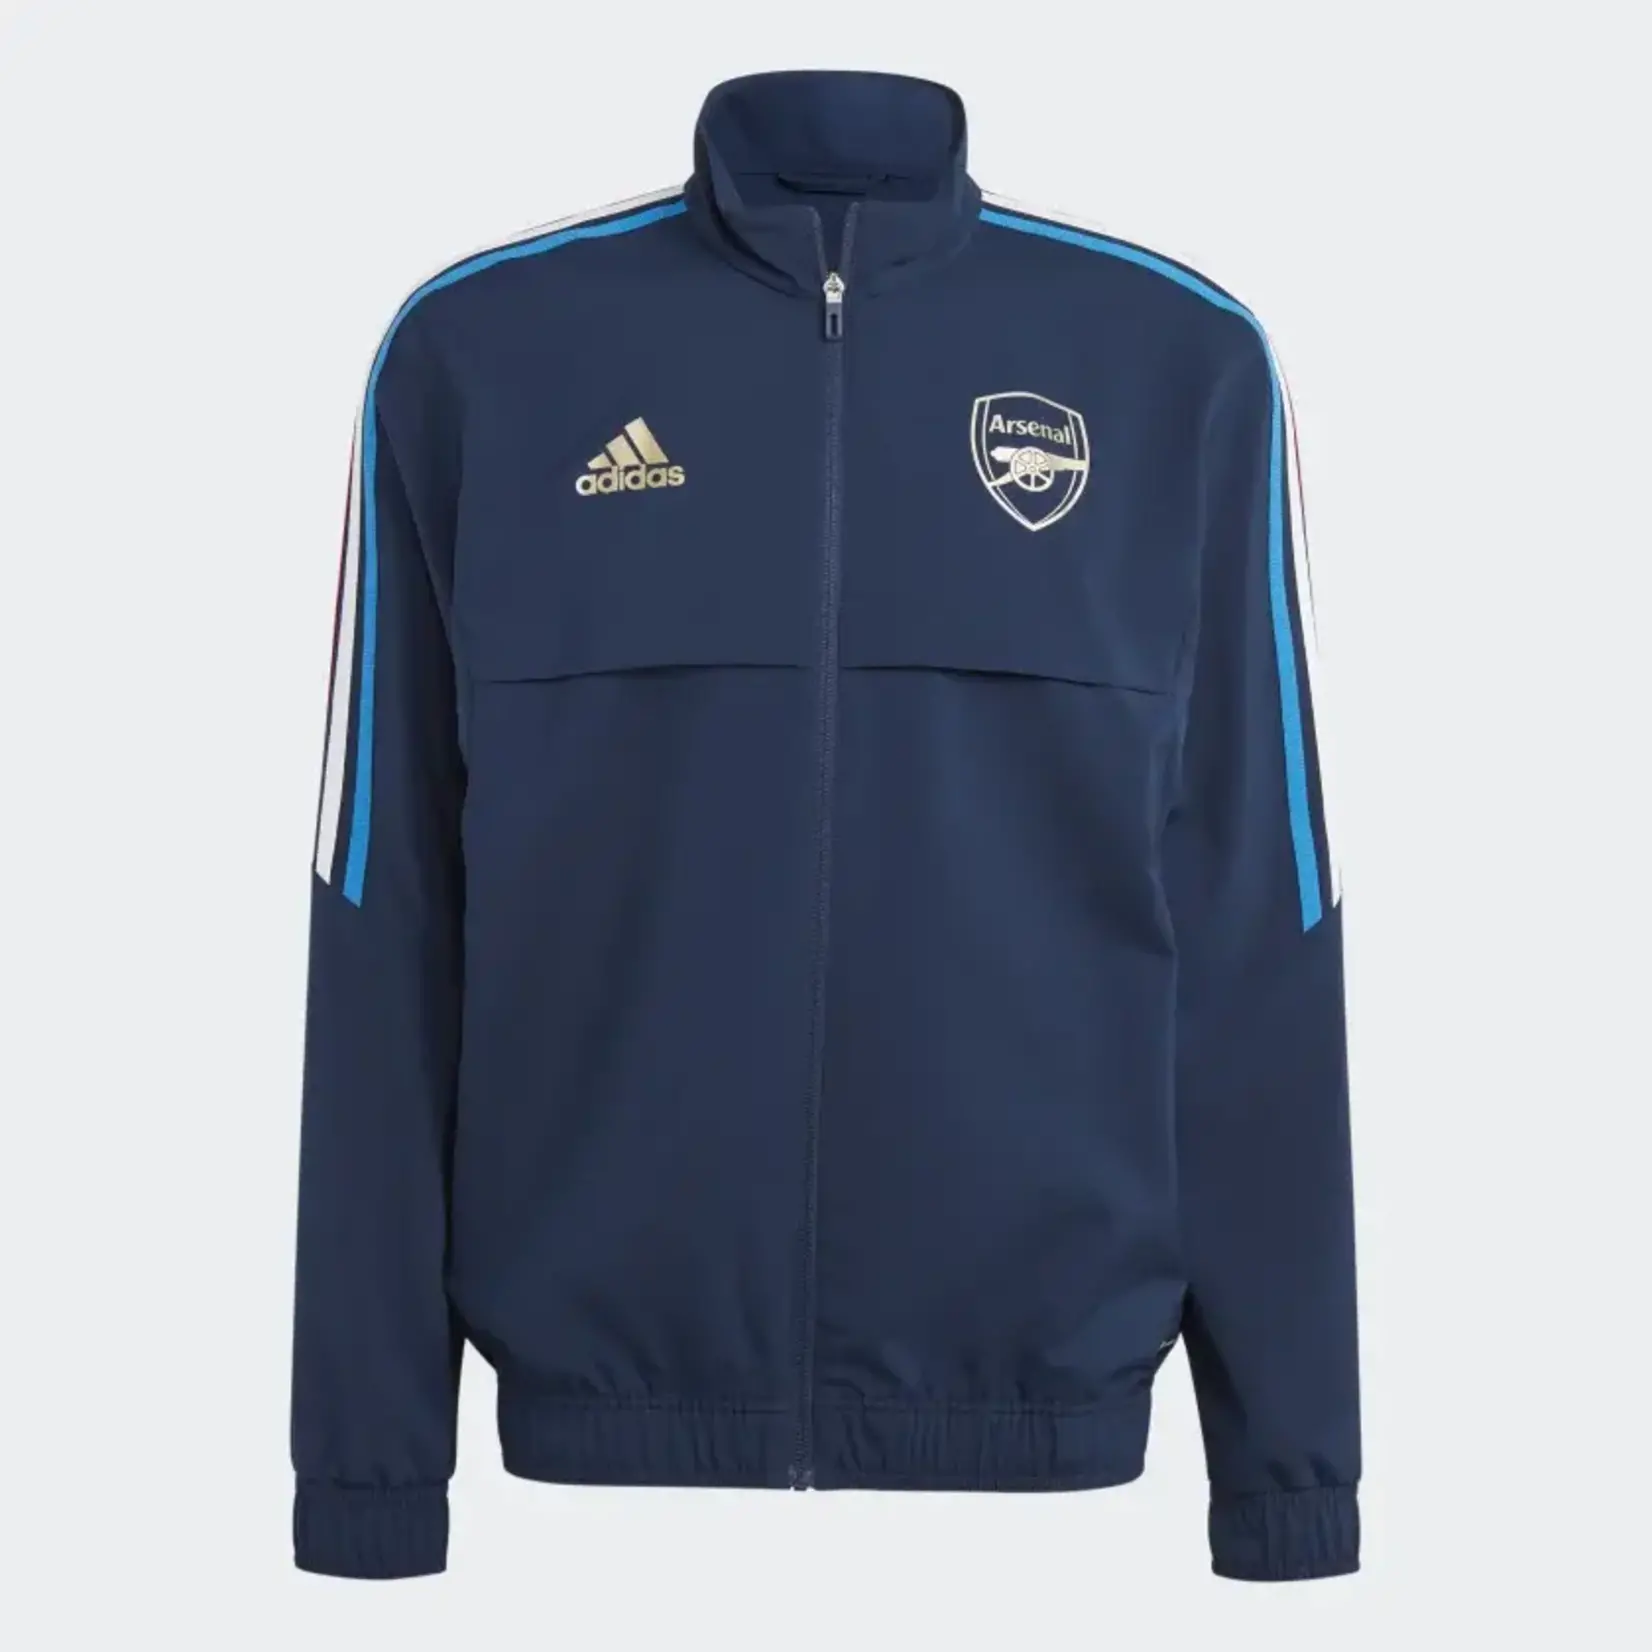 Adidas Arsenal Pre Jacket